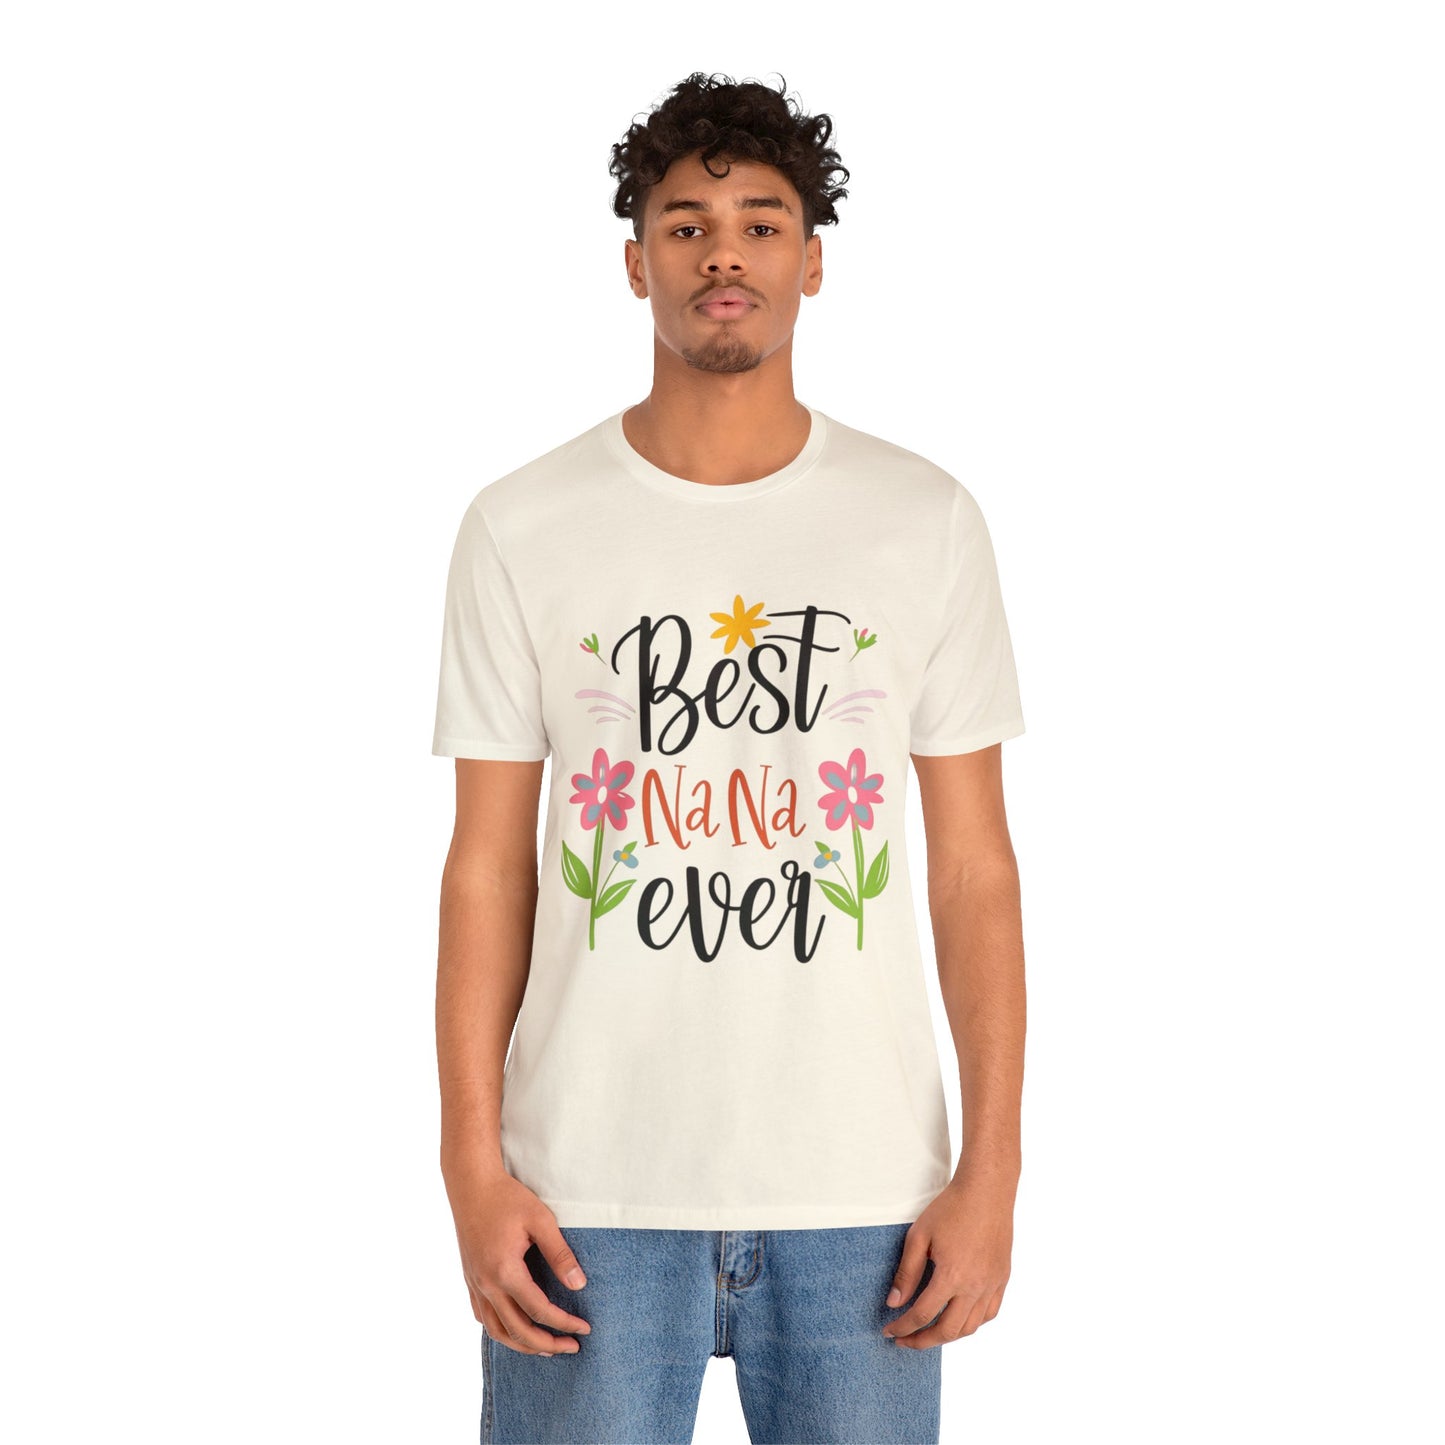 Best Nana Ever Unisex T-shirt with Flower Design, Quality Cotton T-Shirt